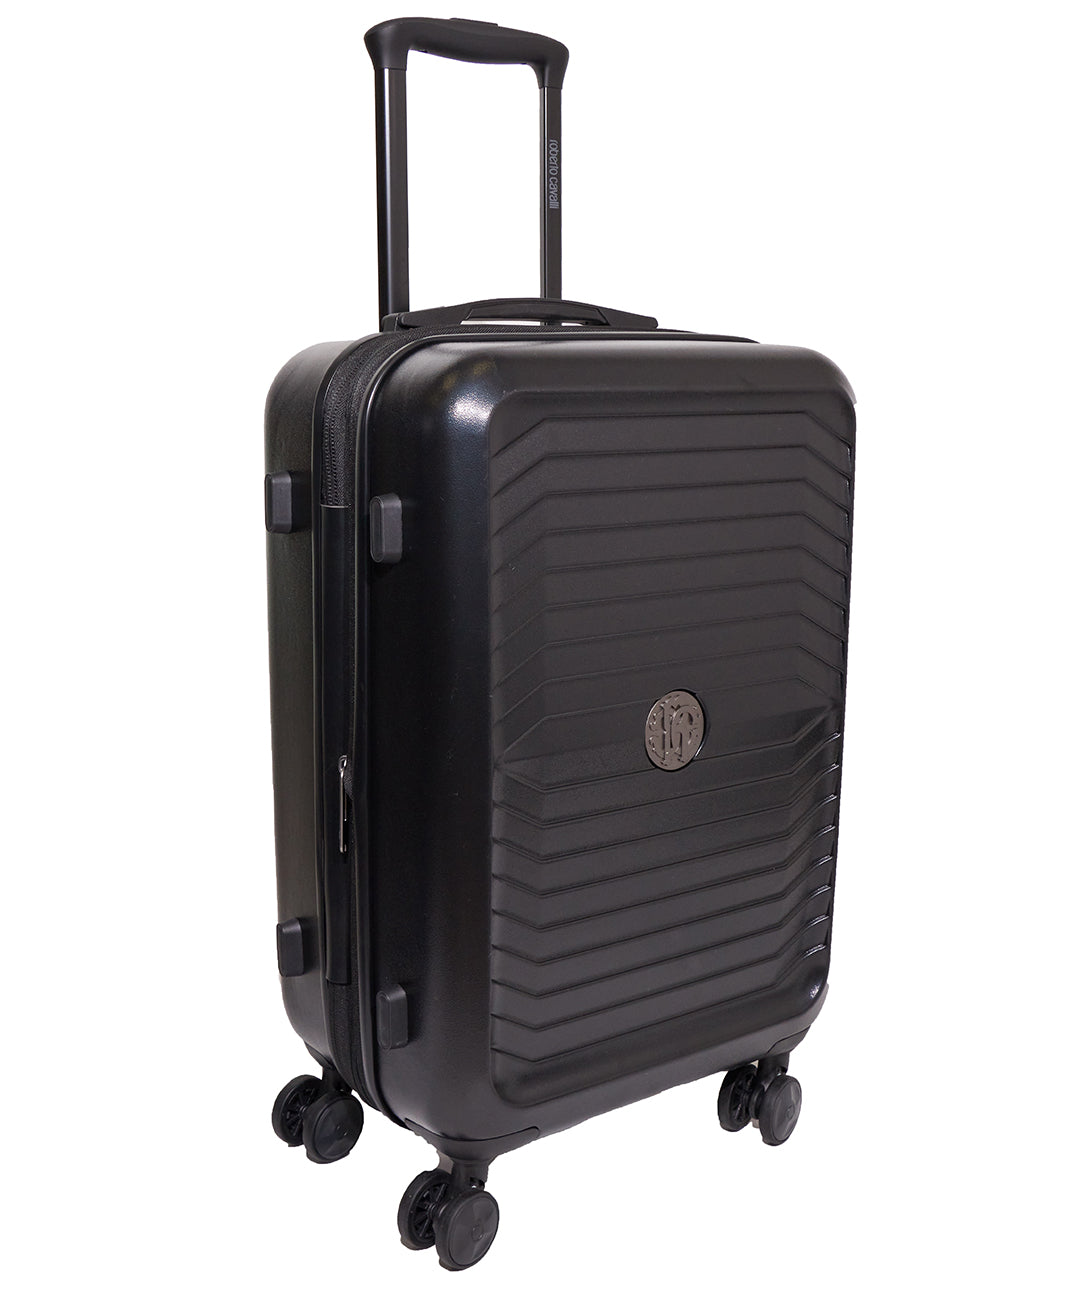 Carbon Roberto Cavalli Luggage Set